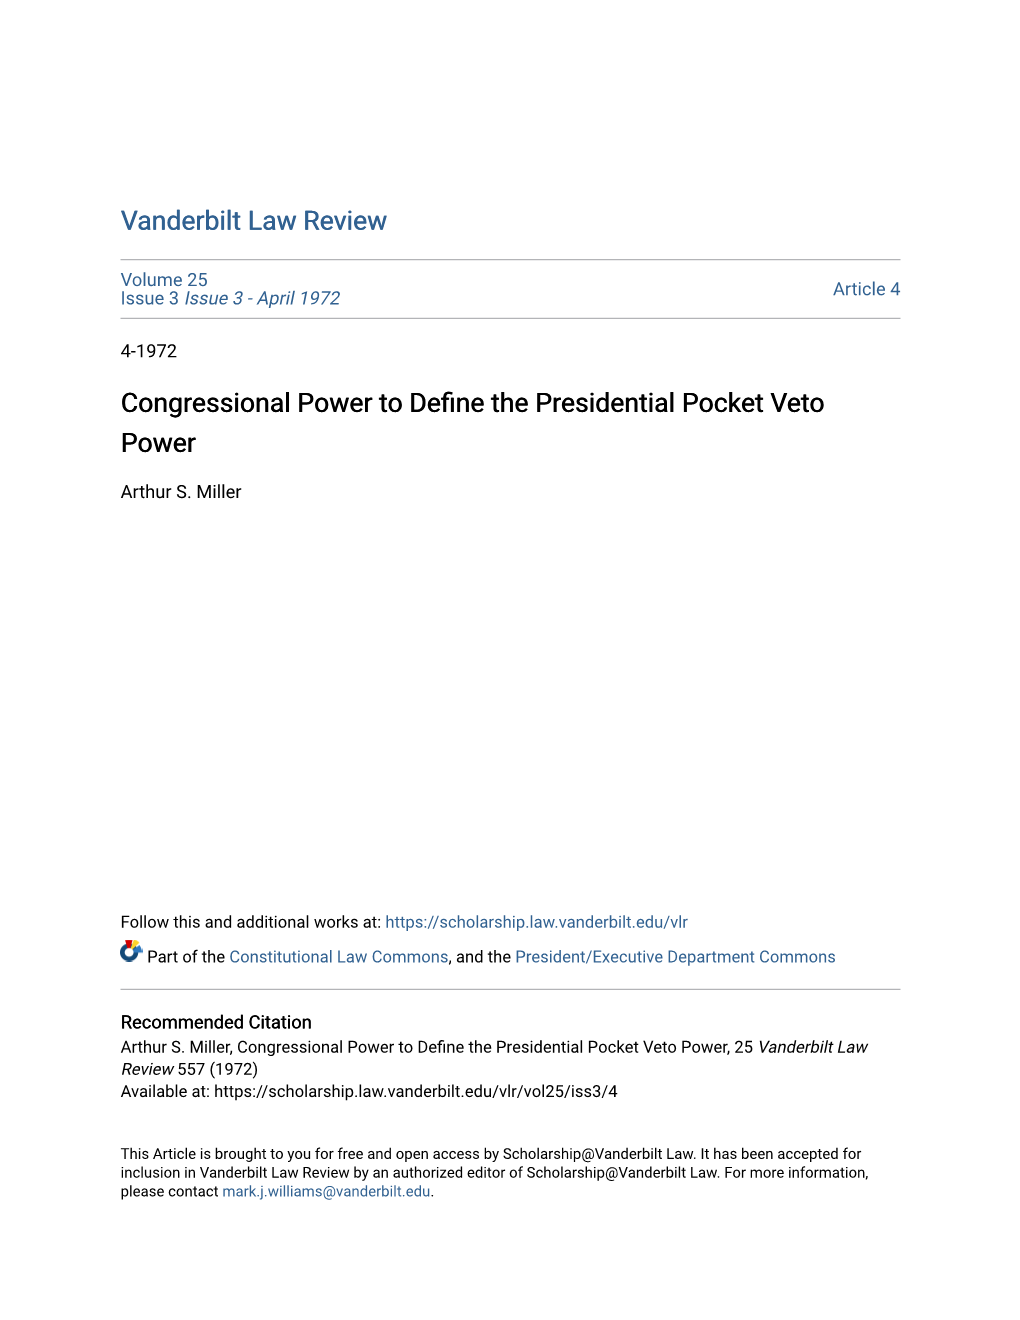 Congressional Power to Define the Presidential Pocket Veto Power